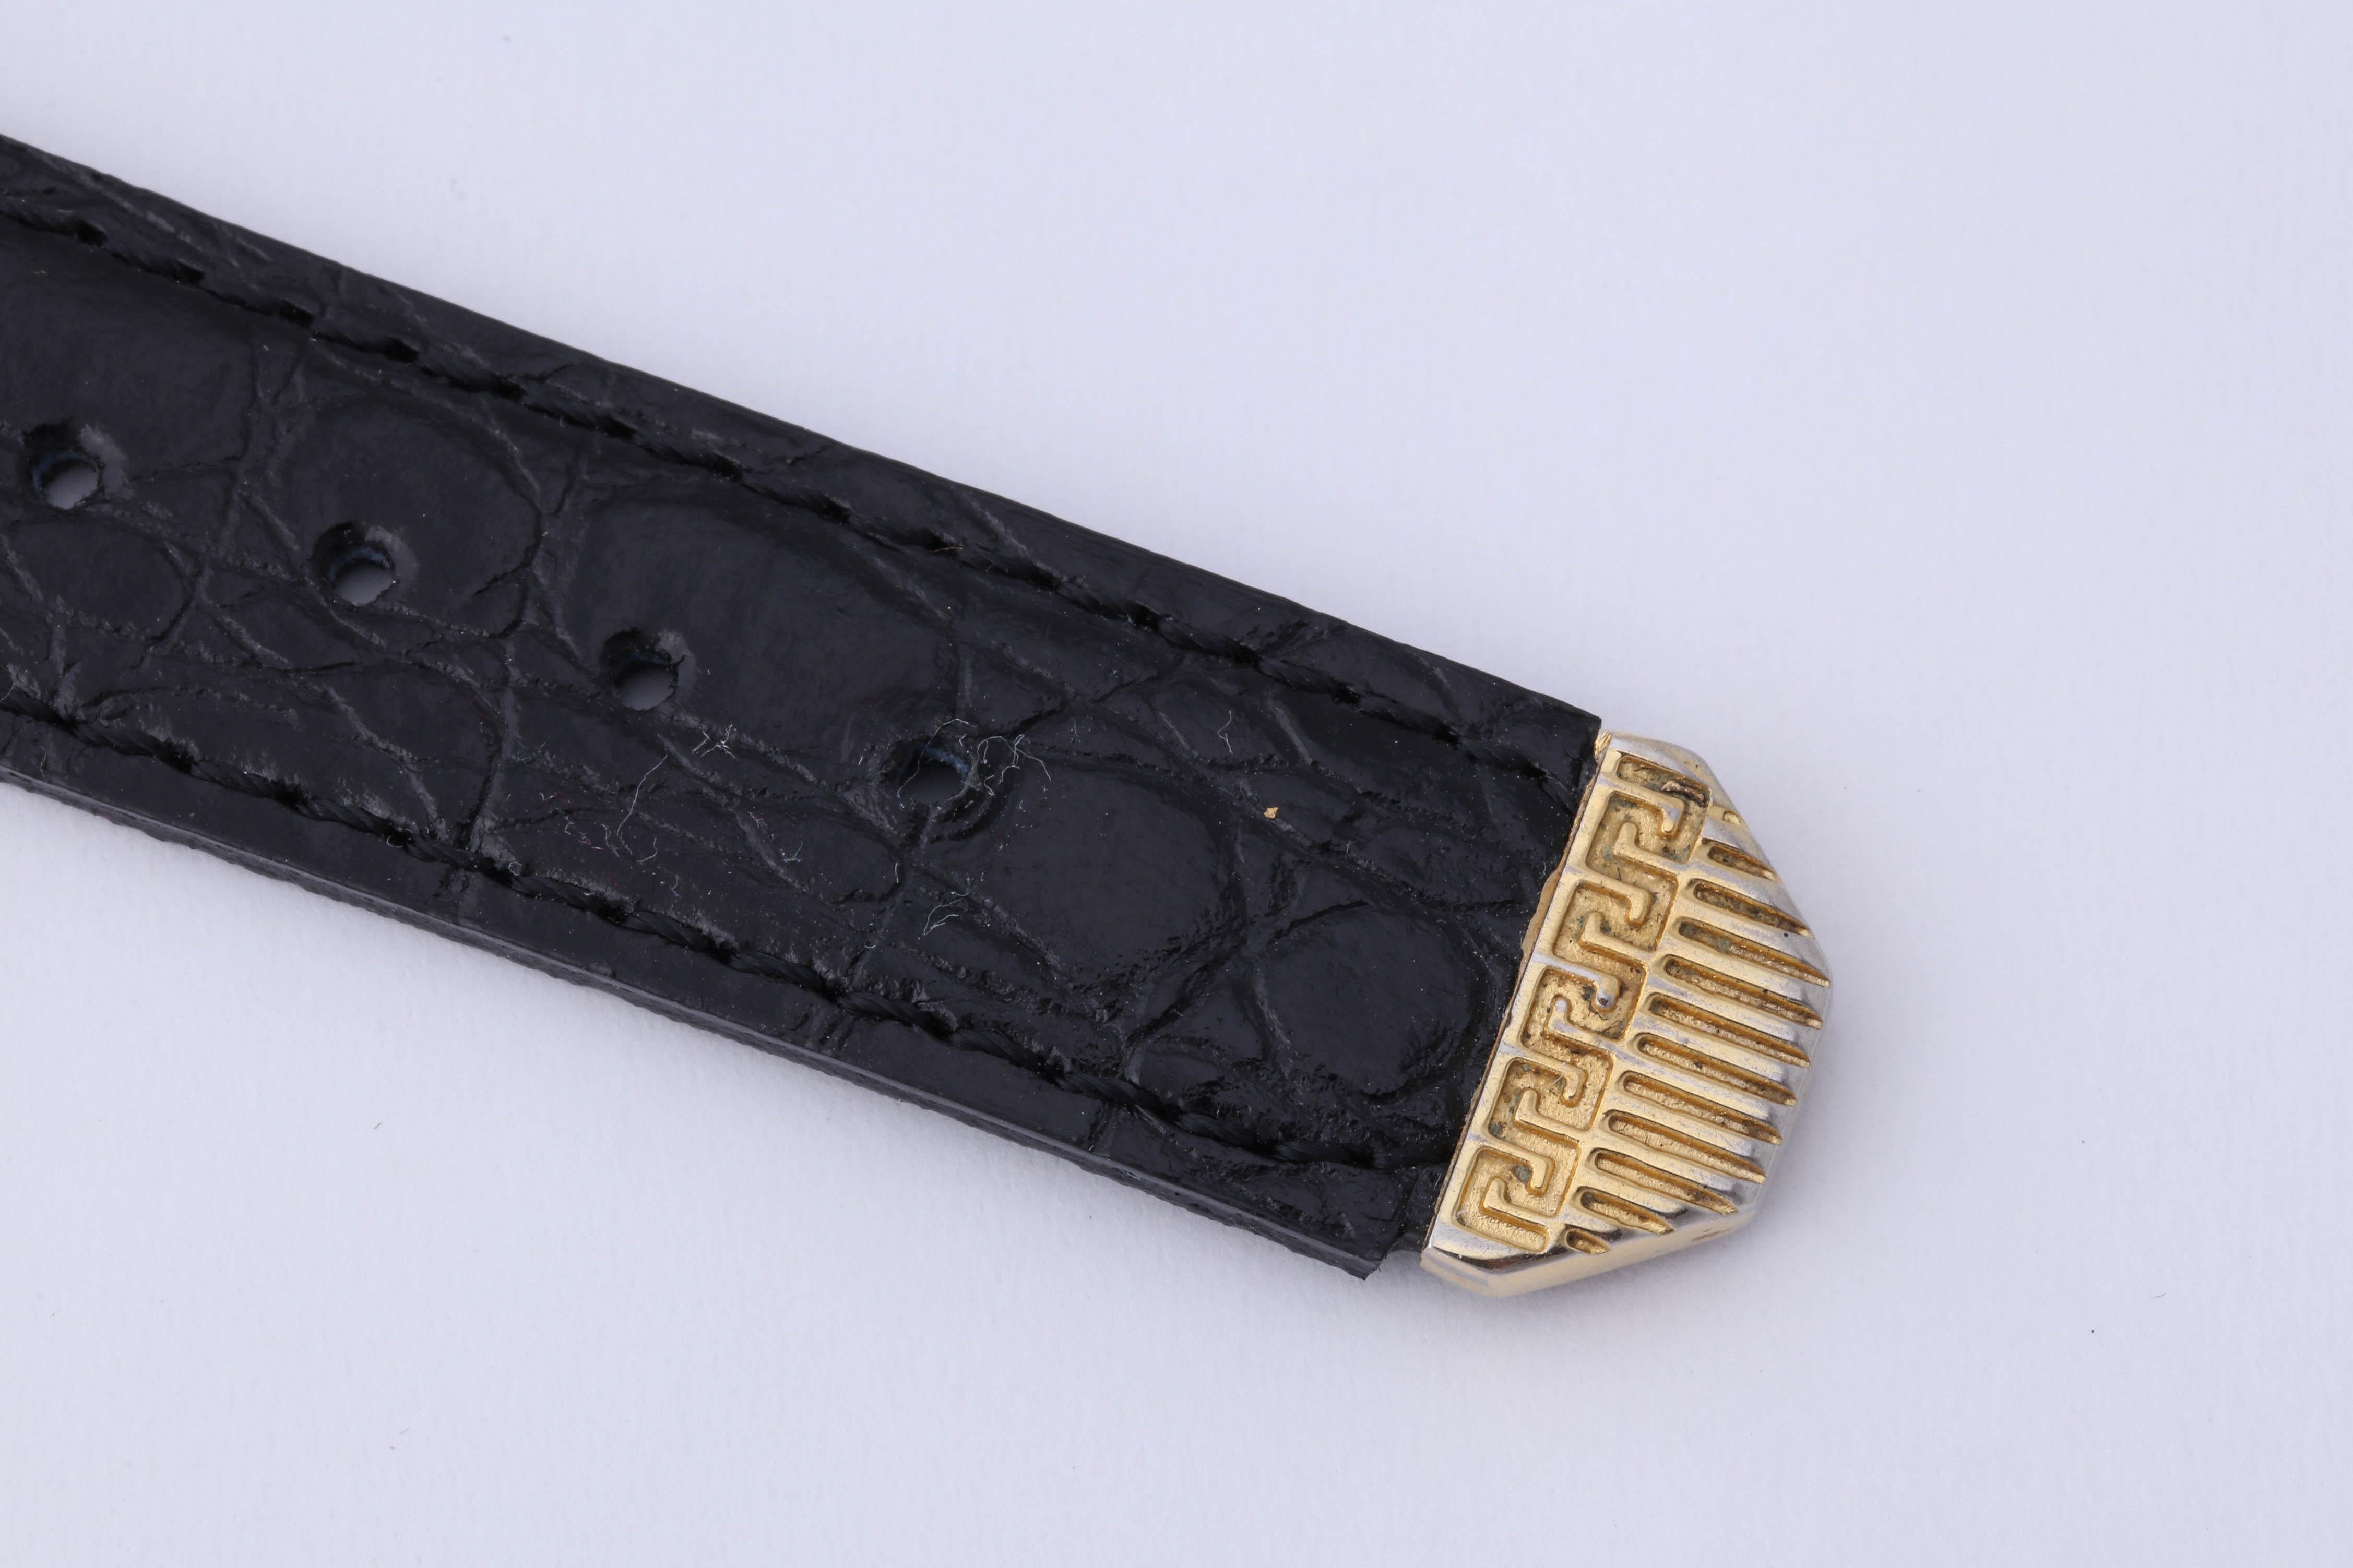   Gianni Versace Medusa Watch with Greek Key Motifs  For Sale 2